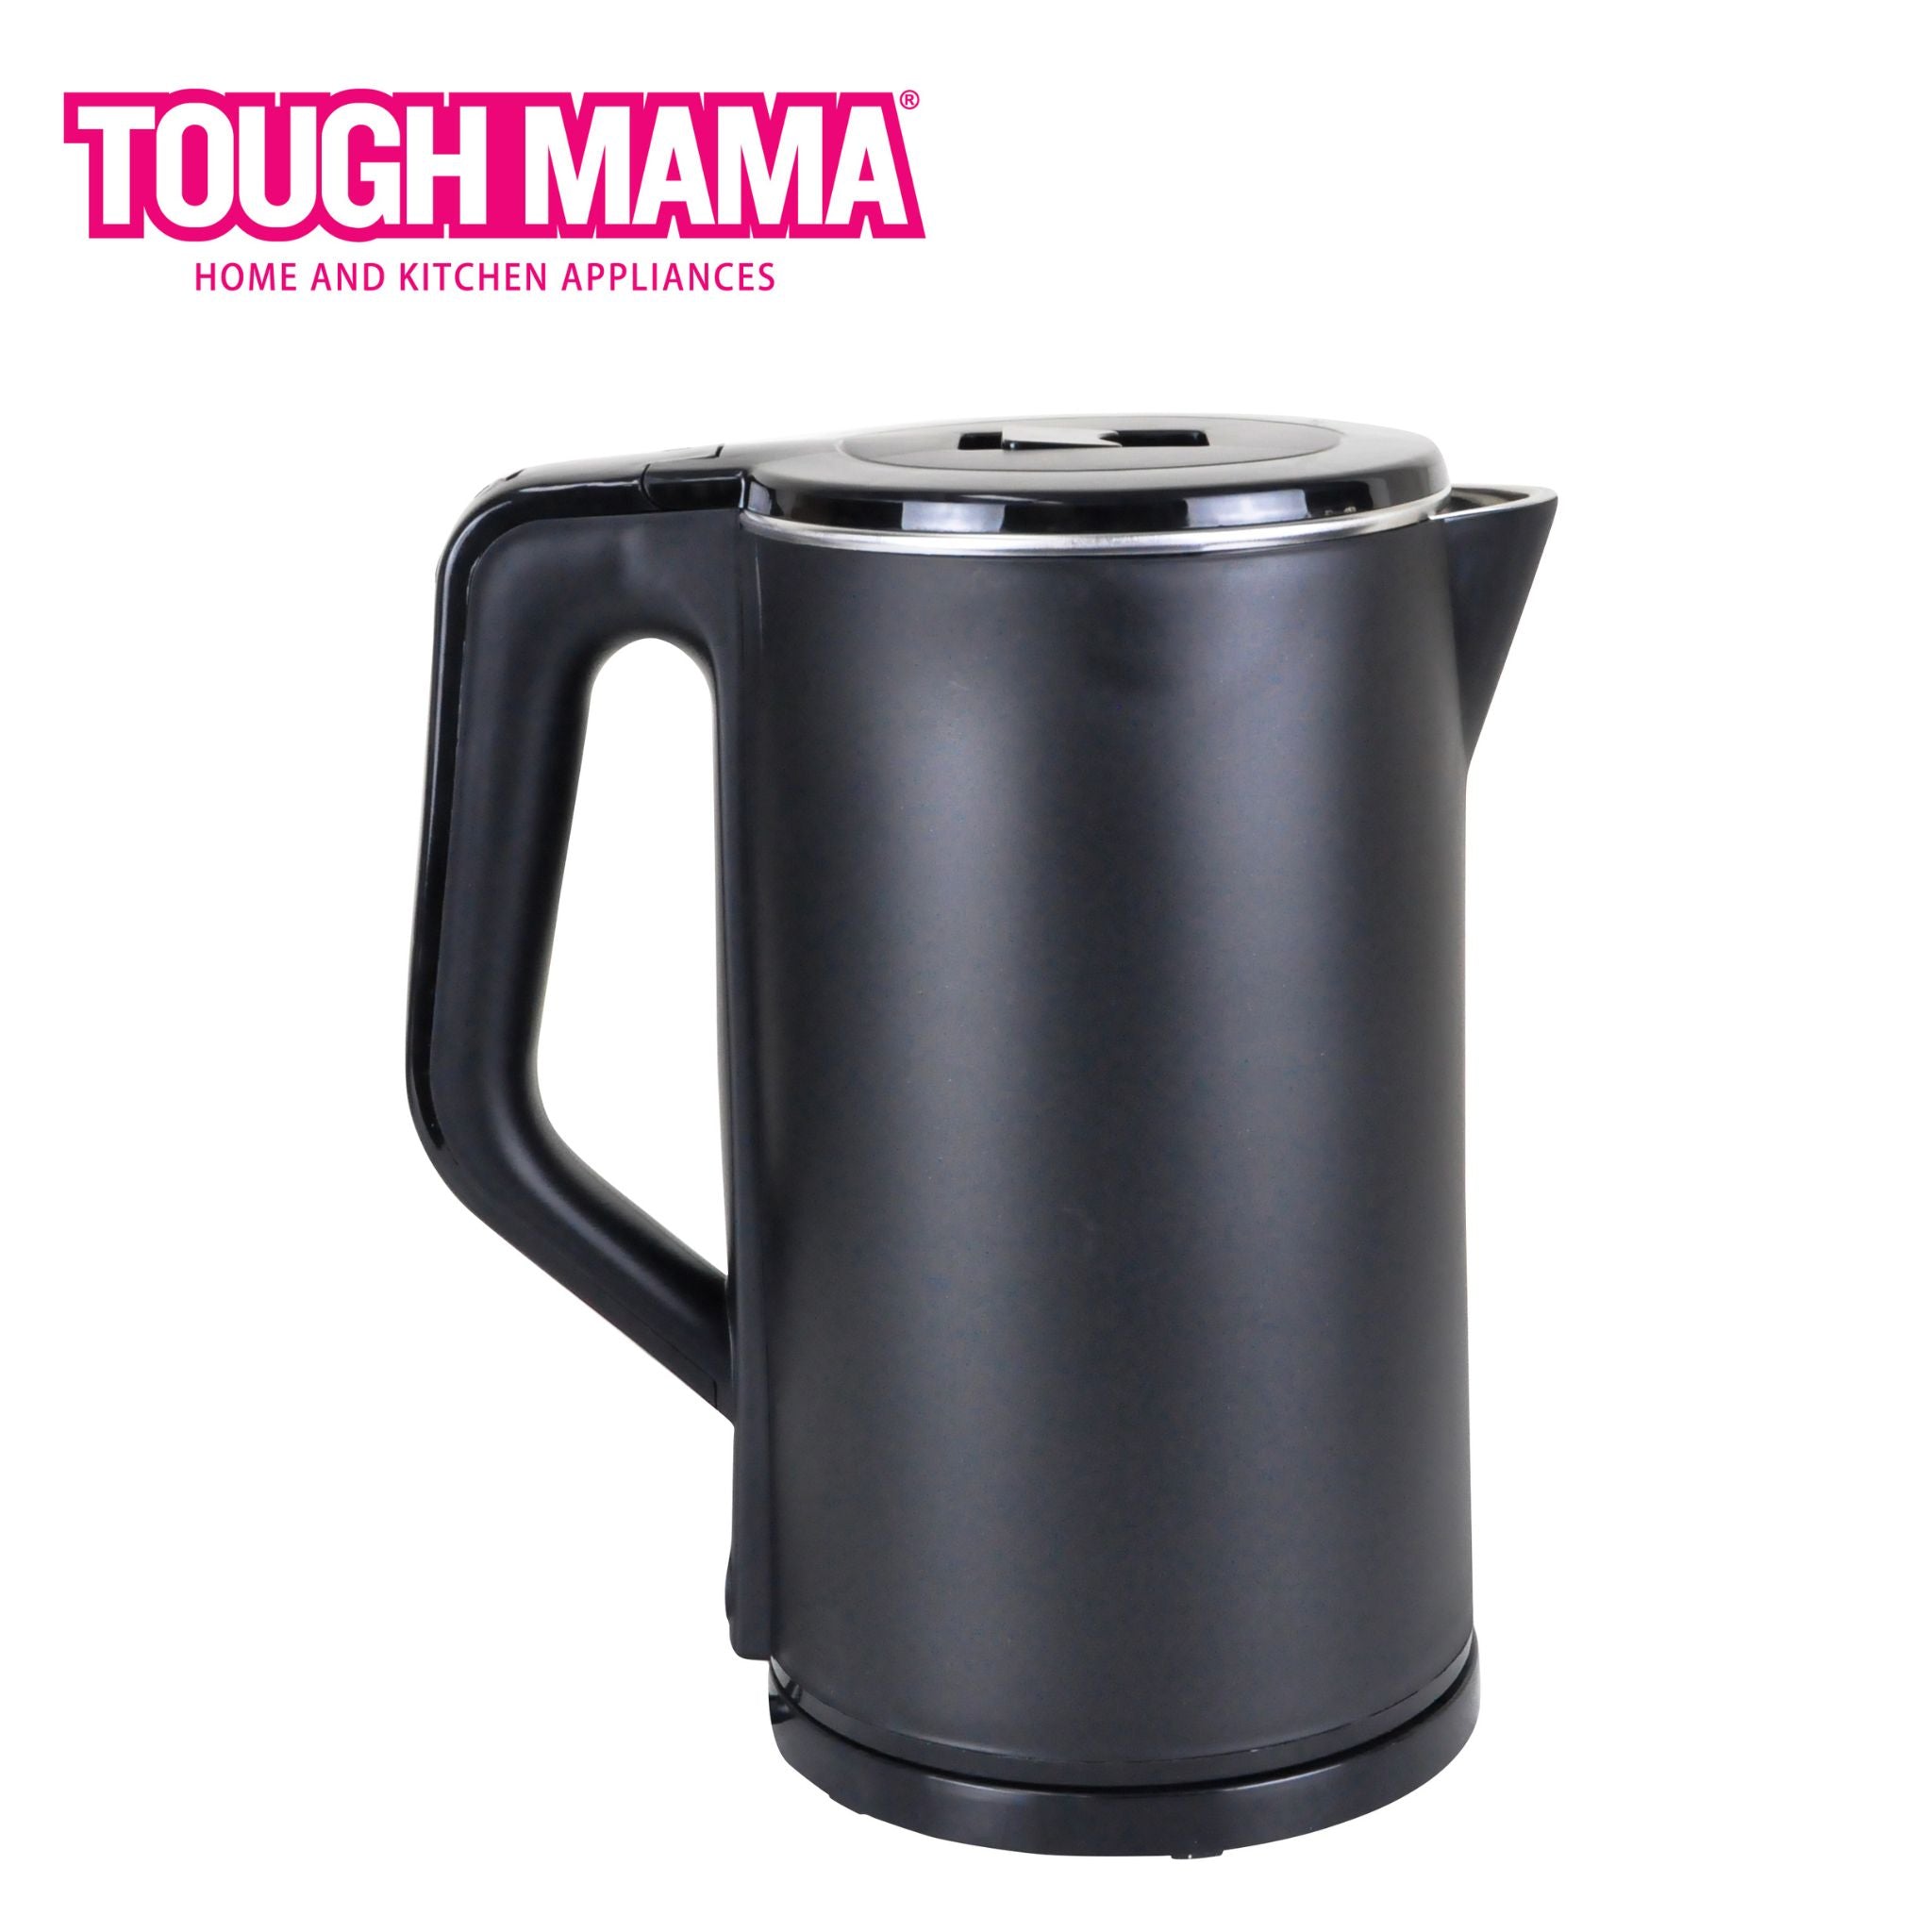 TOUGH MAMA NTMJK2-DL4 Electric Kettle Tough Mama